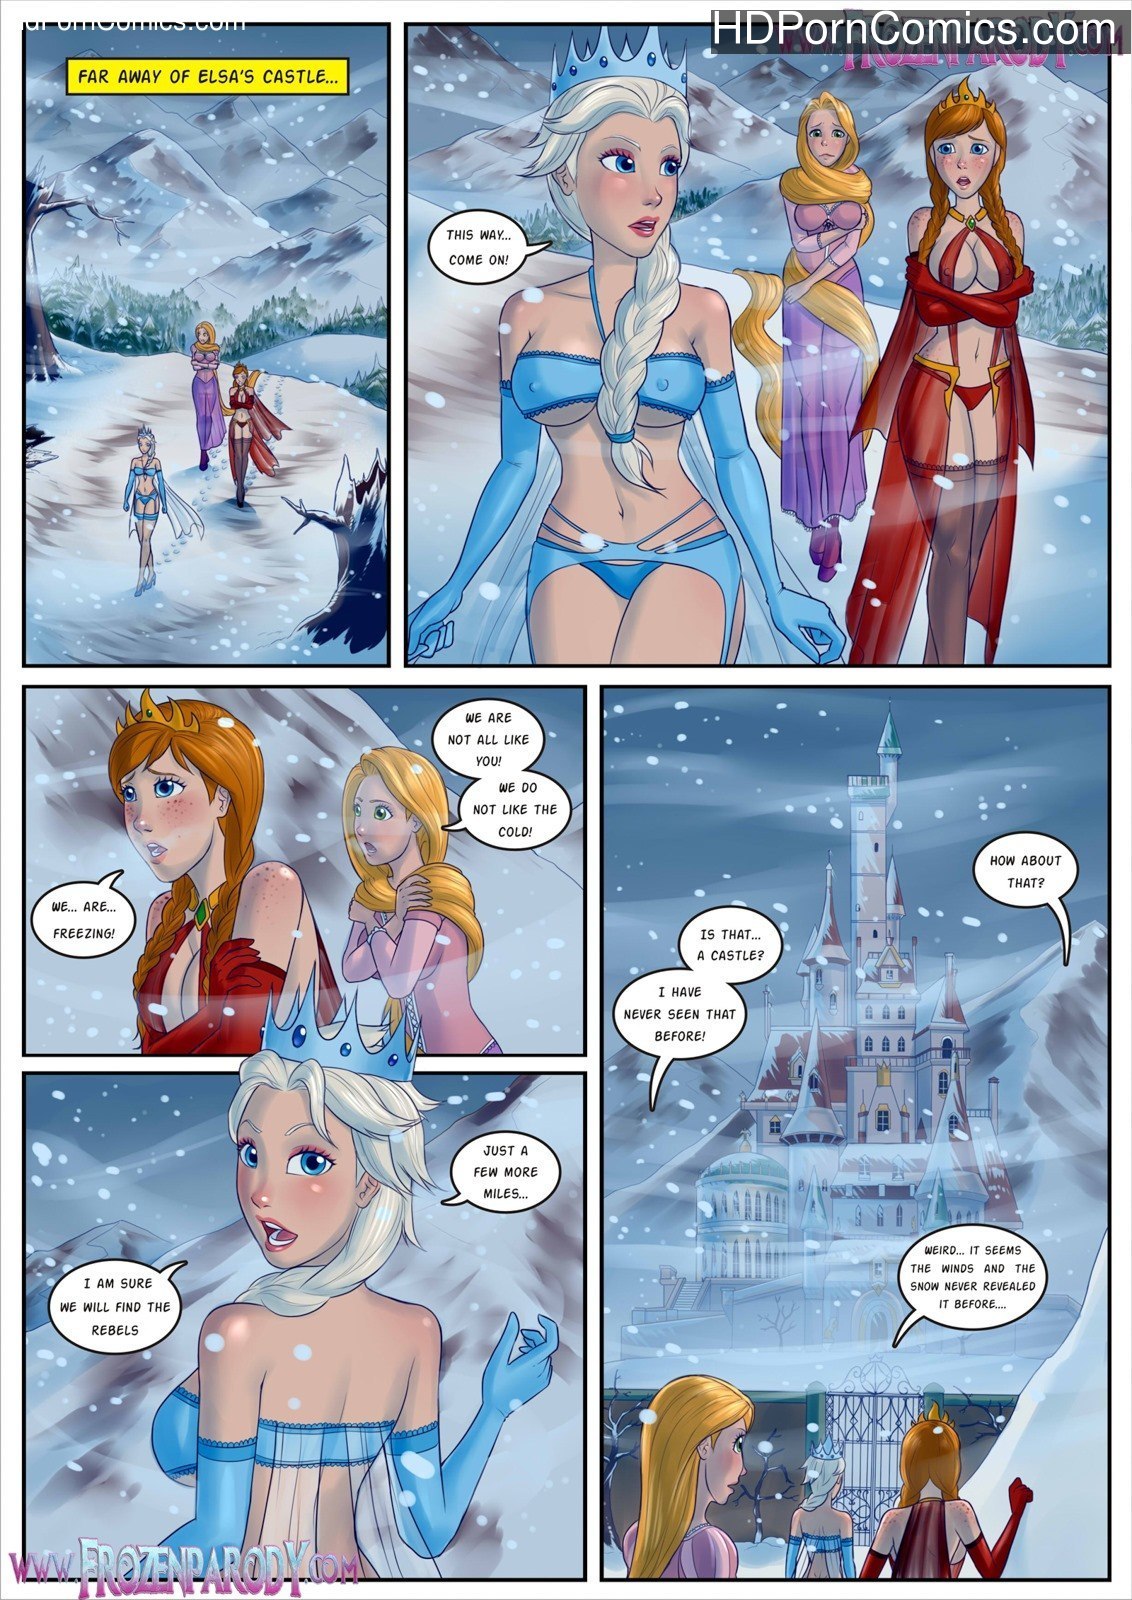 Toon Porn Parody - Frozen Parody 13- Beauty And Beast free Cartoon Porn Comic - HD Porn Comics